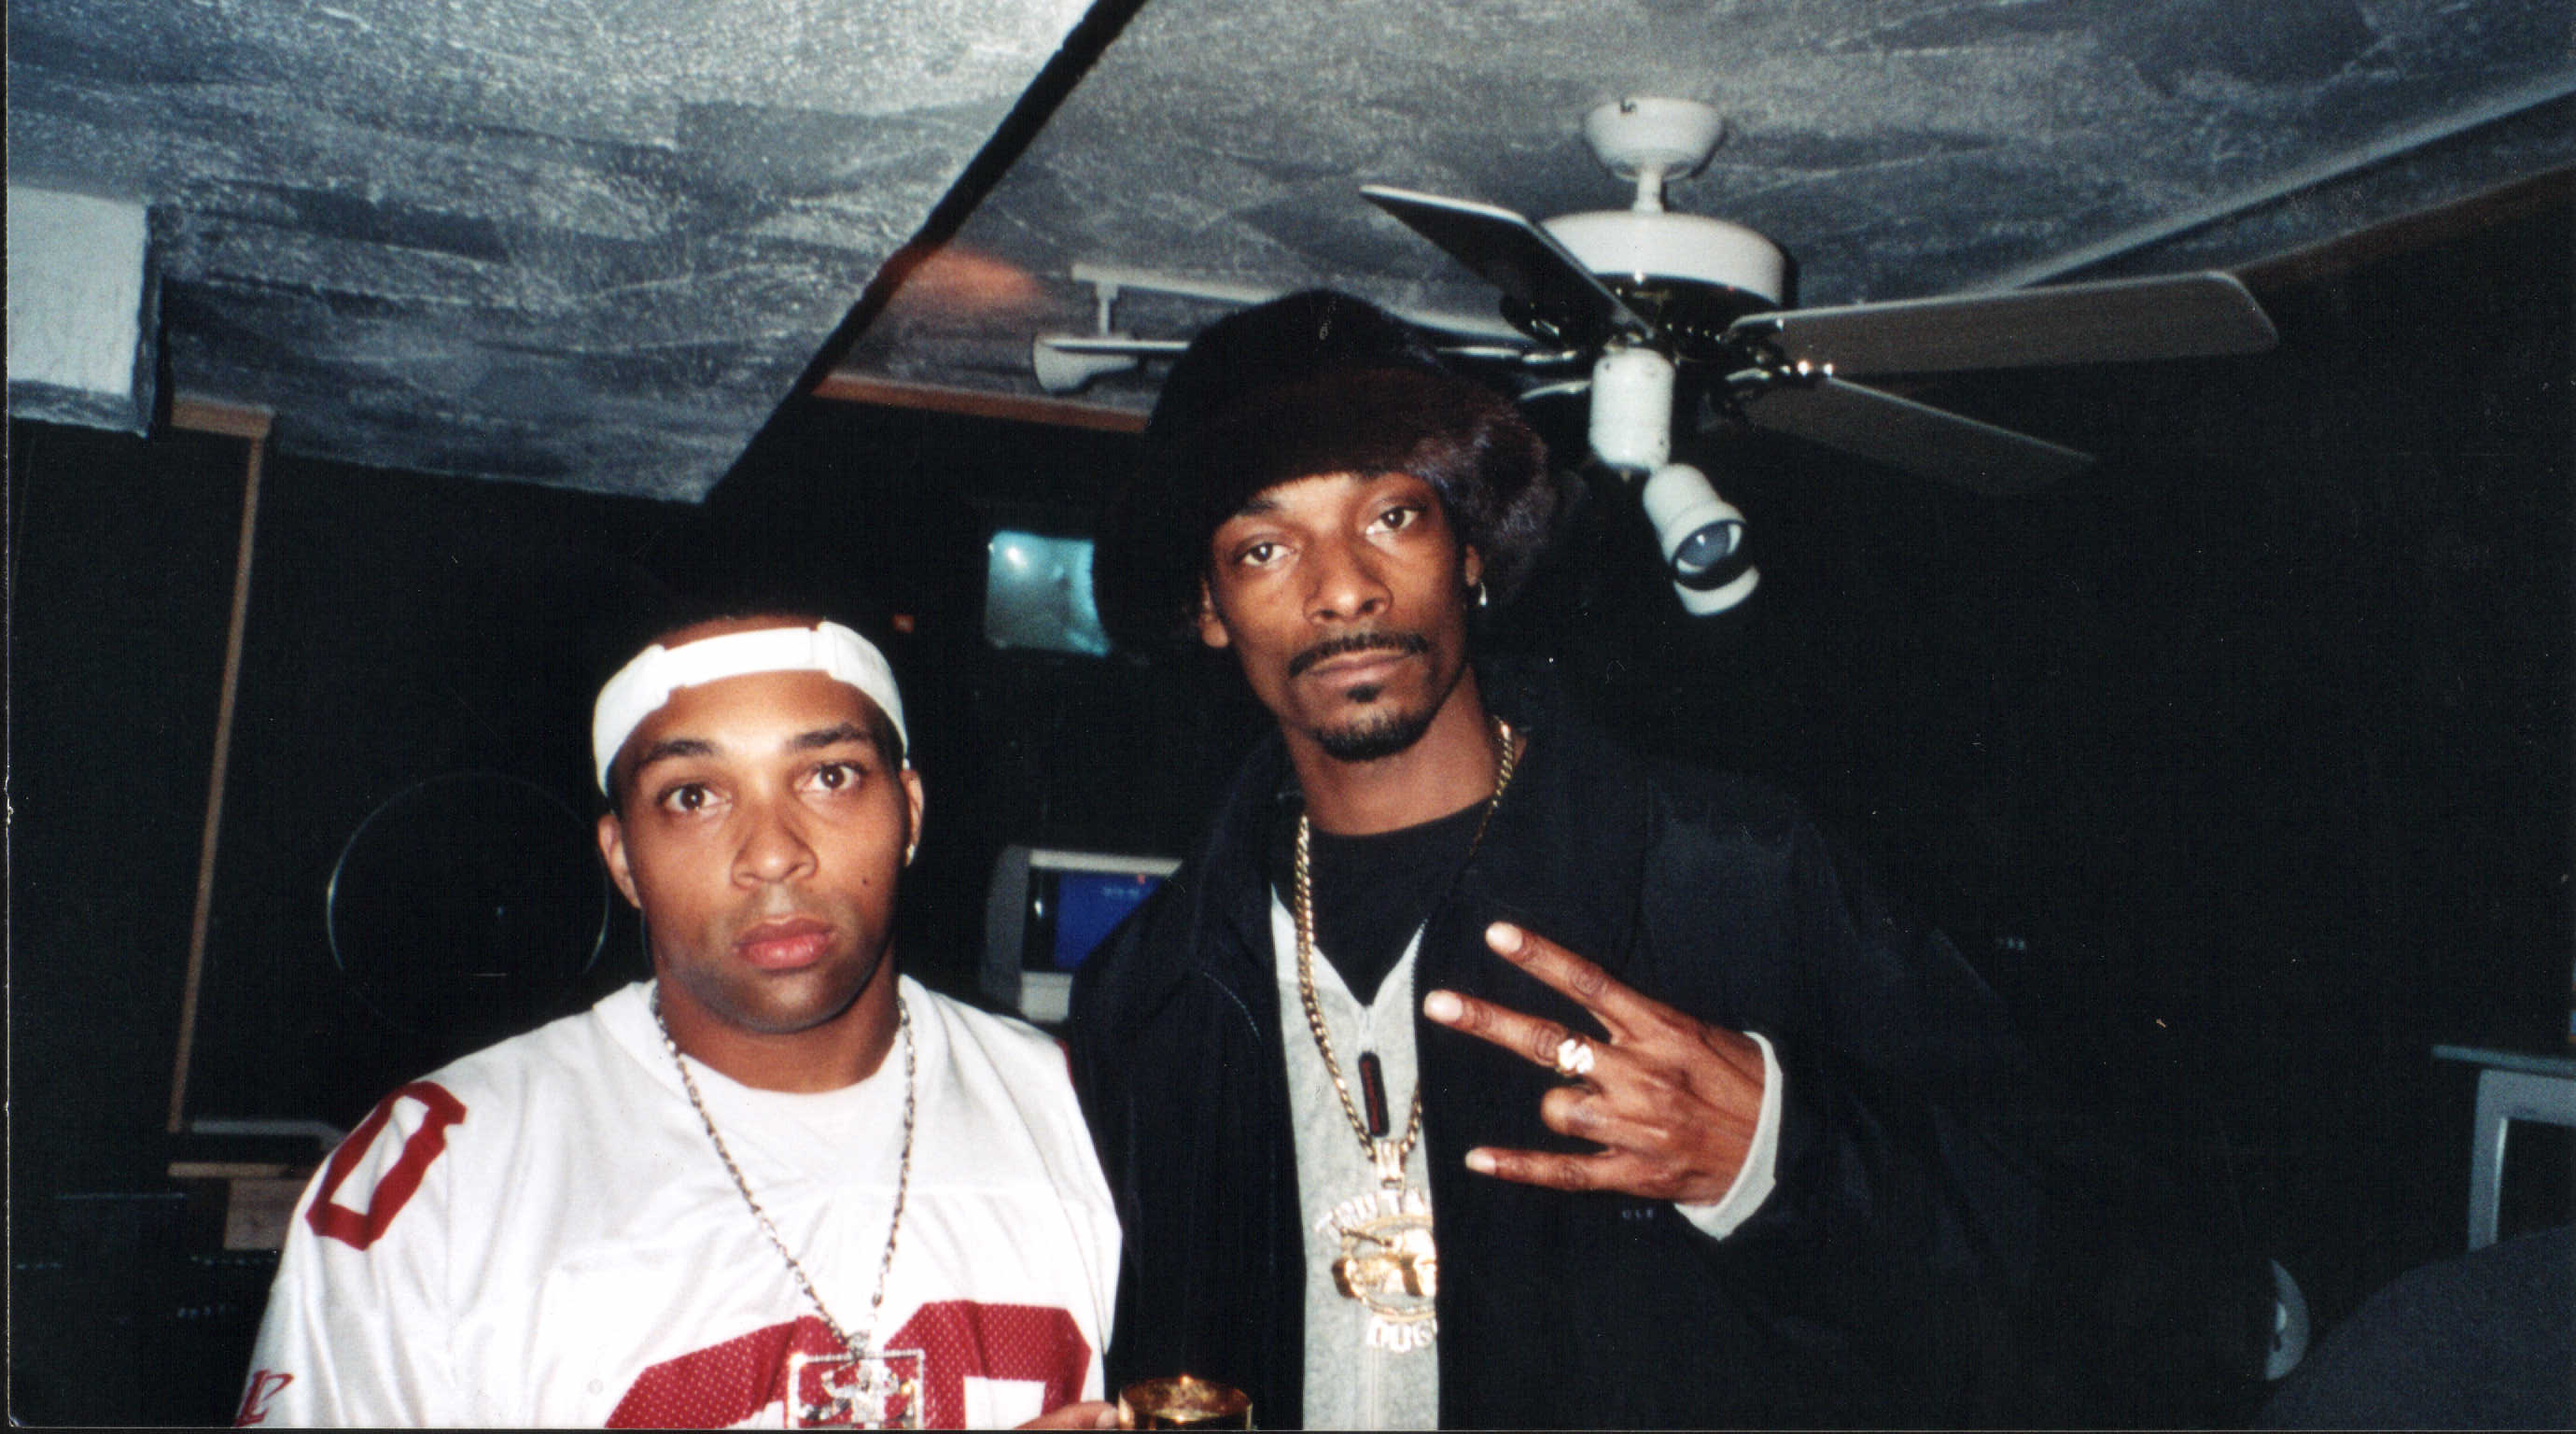 Mauly and Snoop Doog